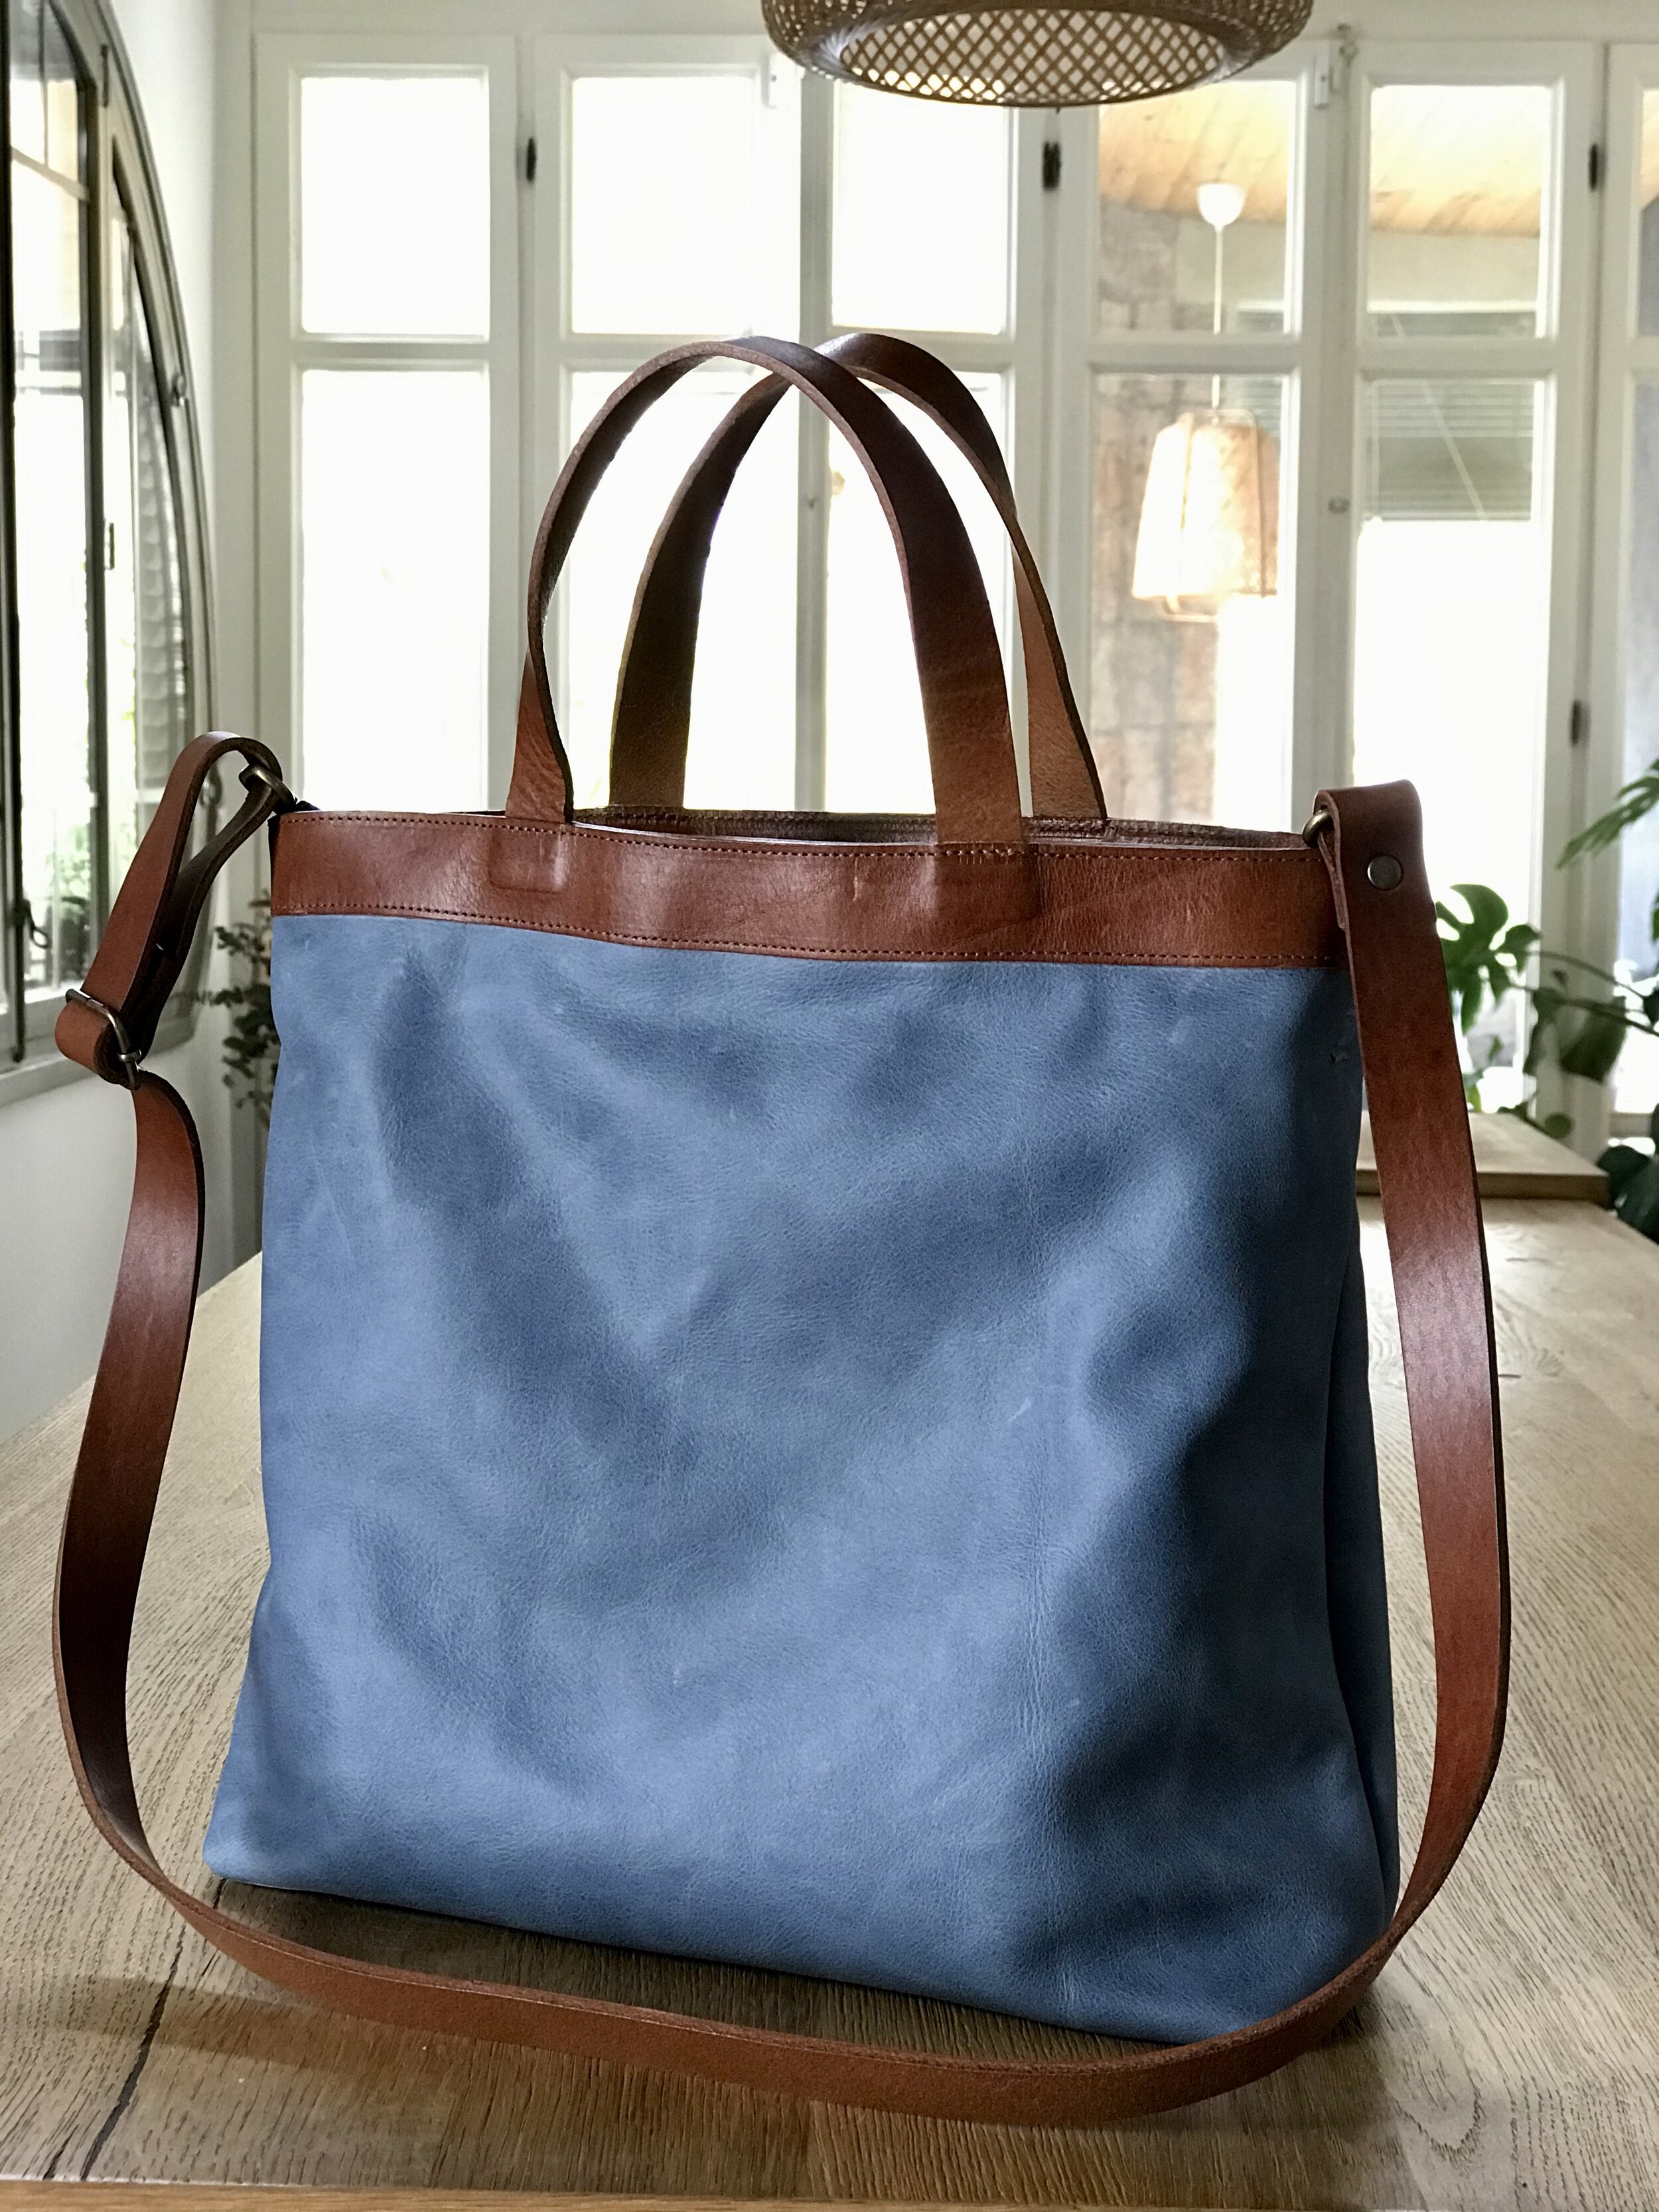 The Soft Leather Bags of Fall 2020 - PurseBlog